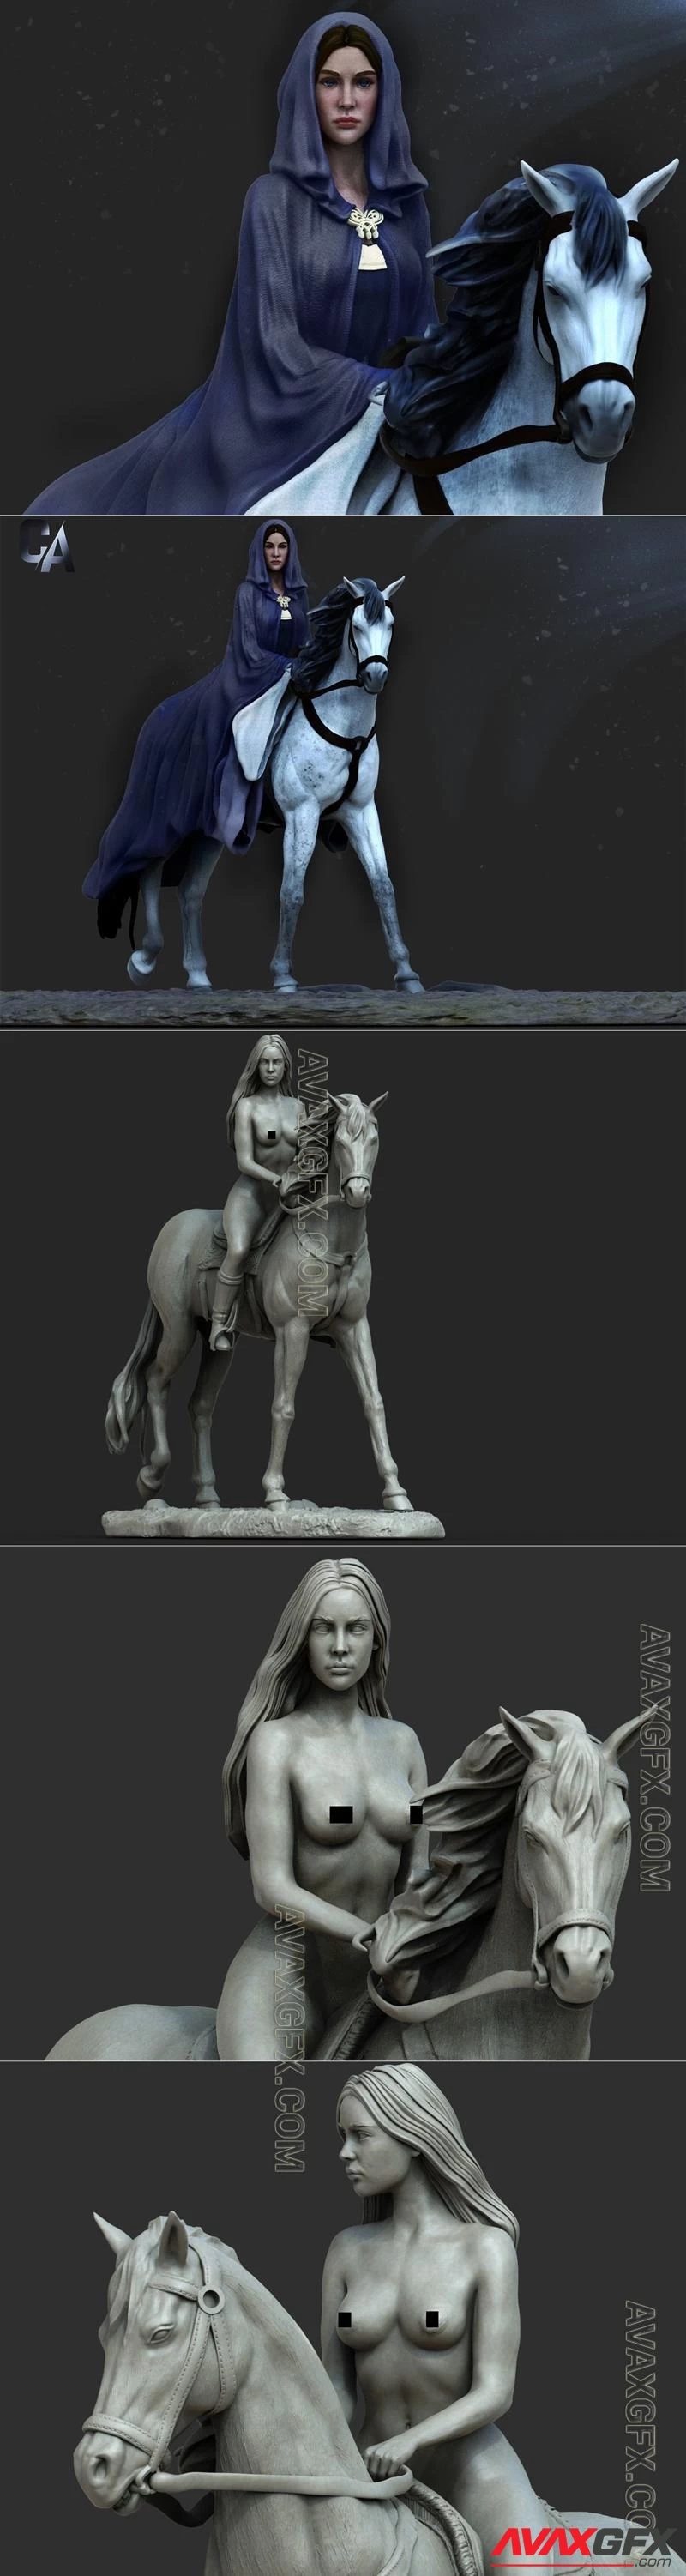 Ca 3d Studios - Arwen statue on horse Standart and NSFW Version